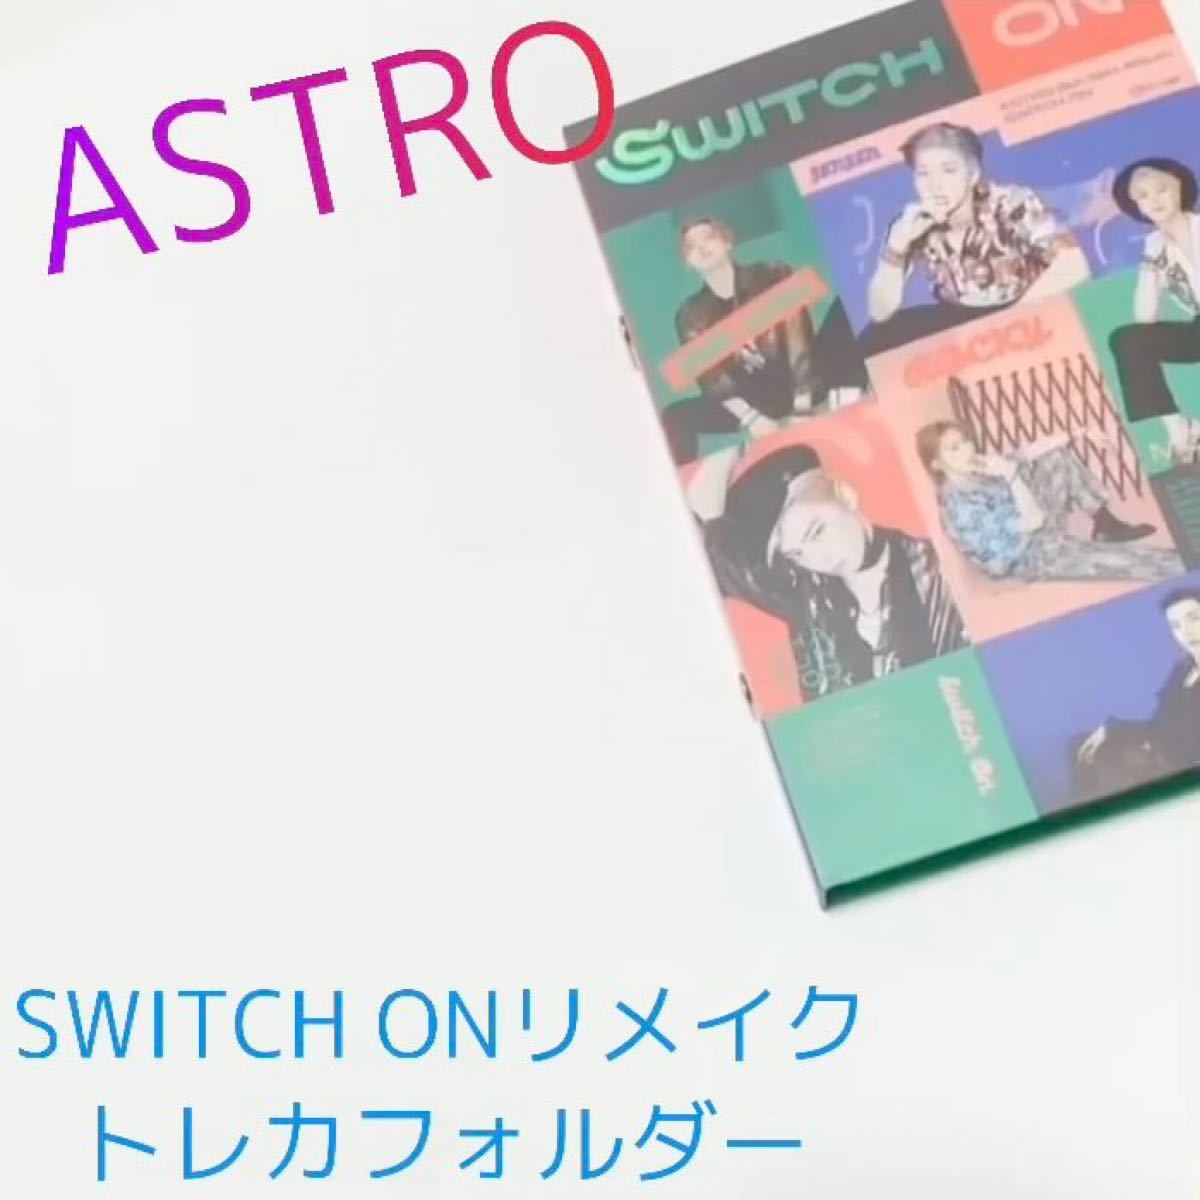 ASTRO ONE FINE DAY 写真集 CD、レコード、音楽ソフト、チケット Kー 